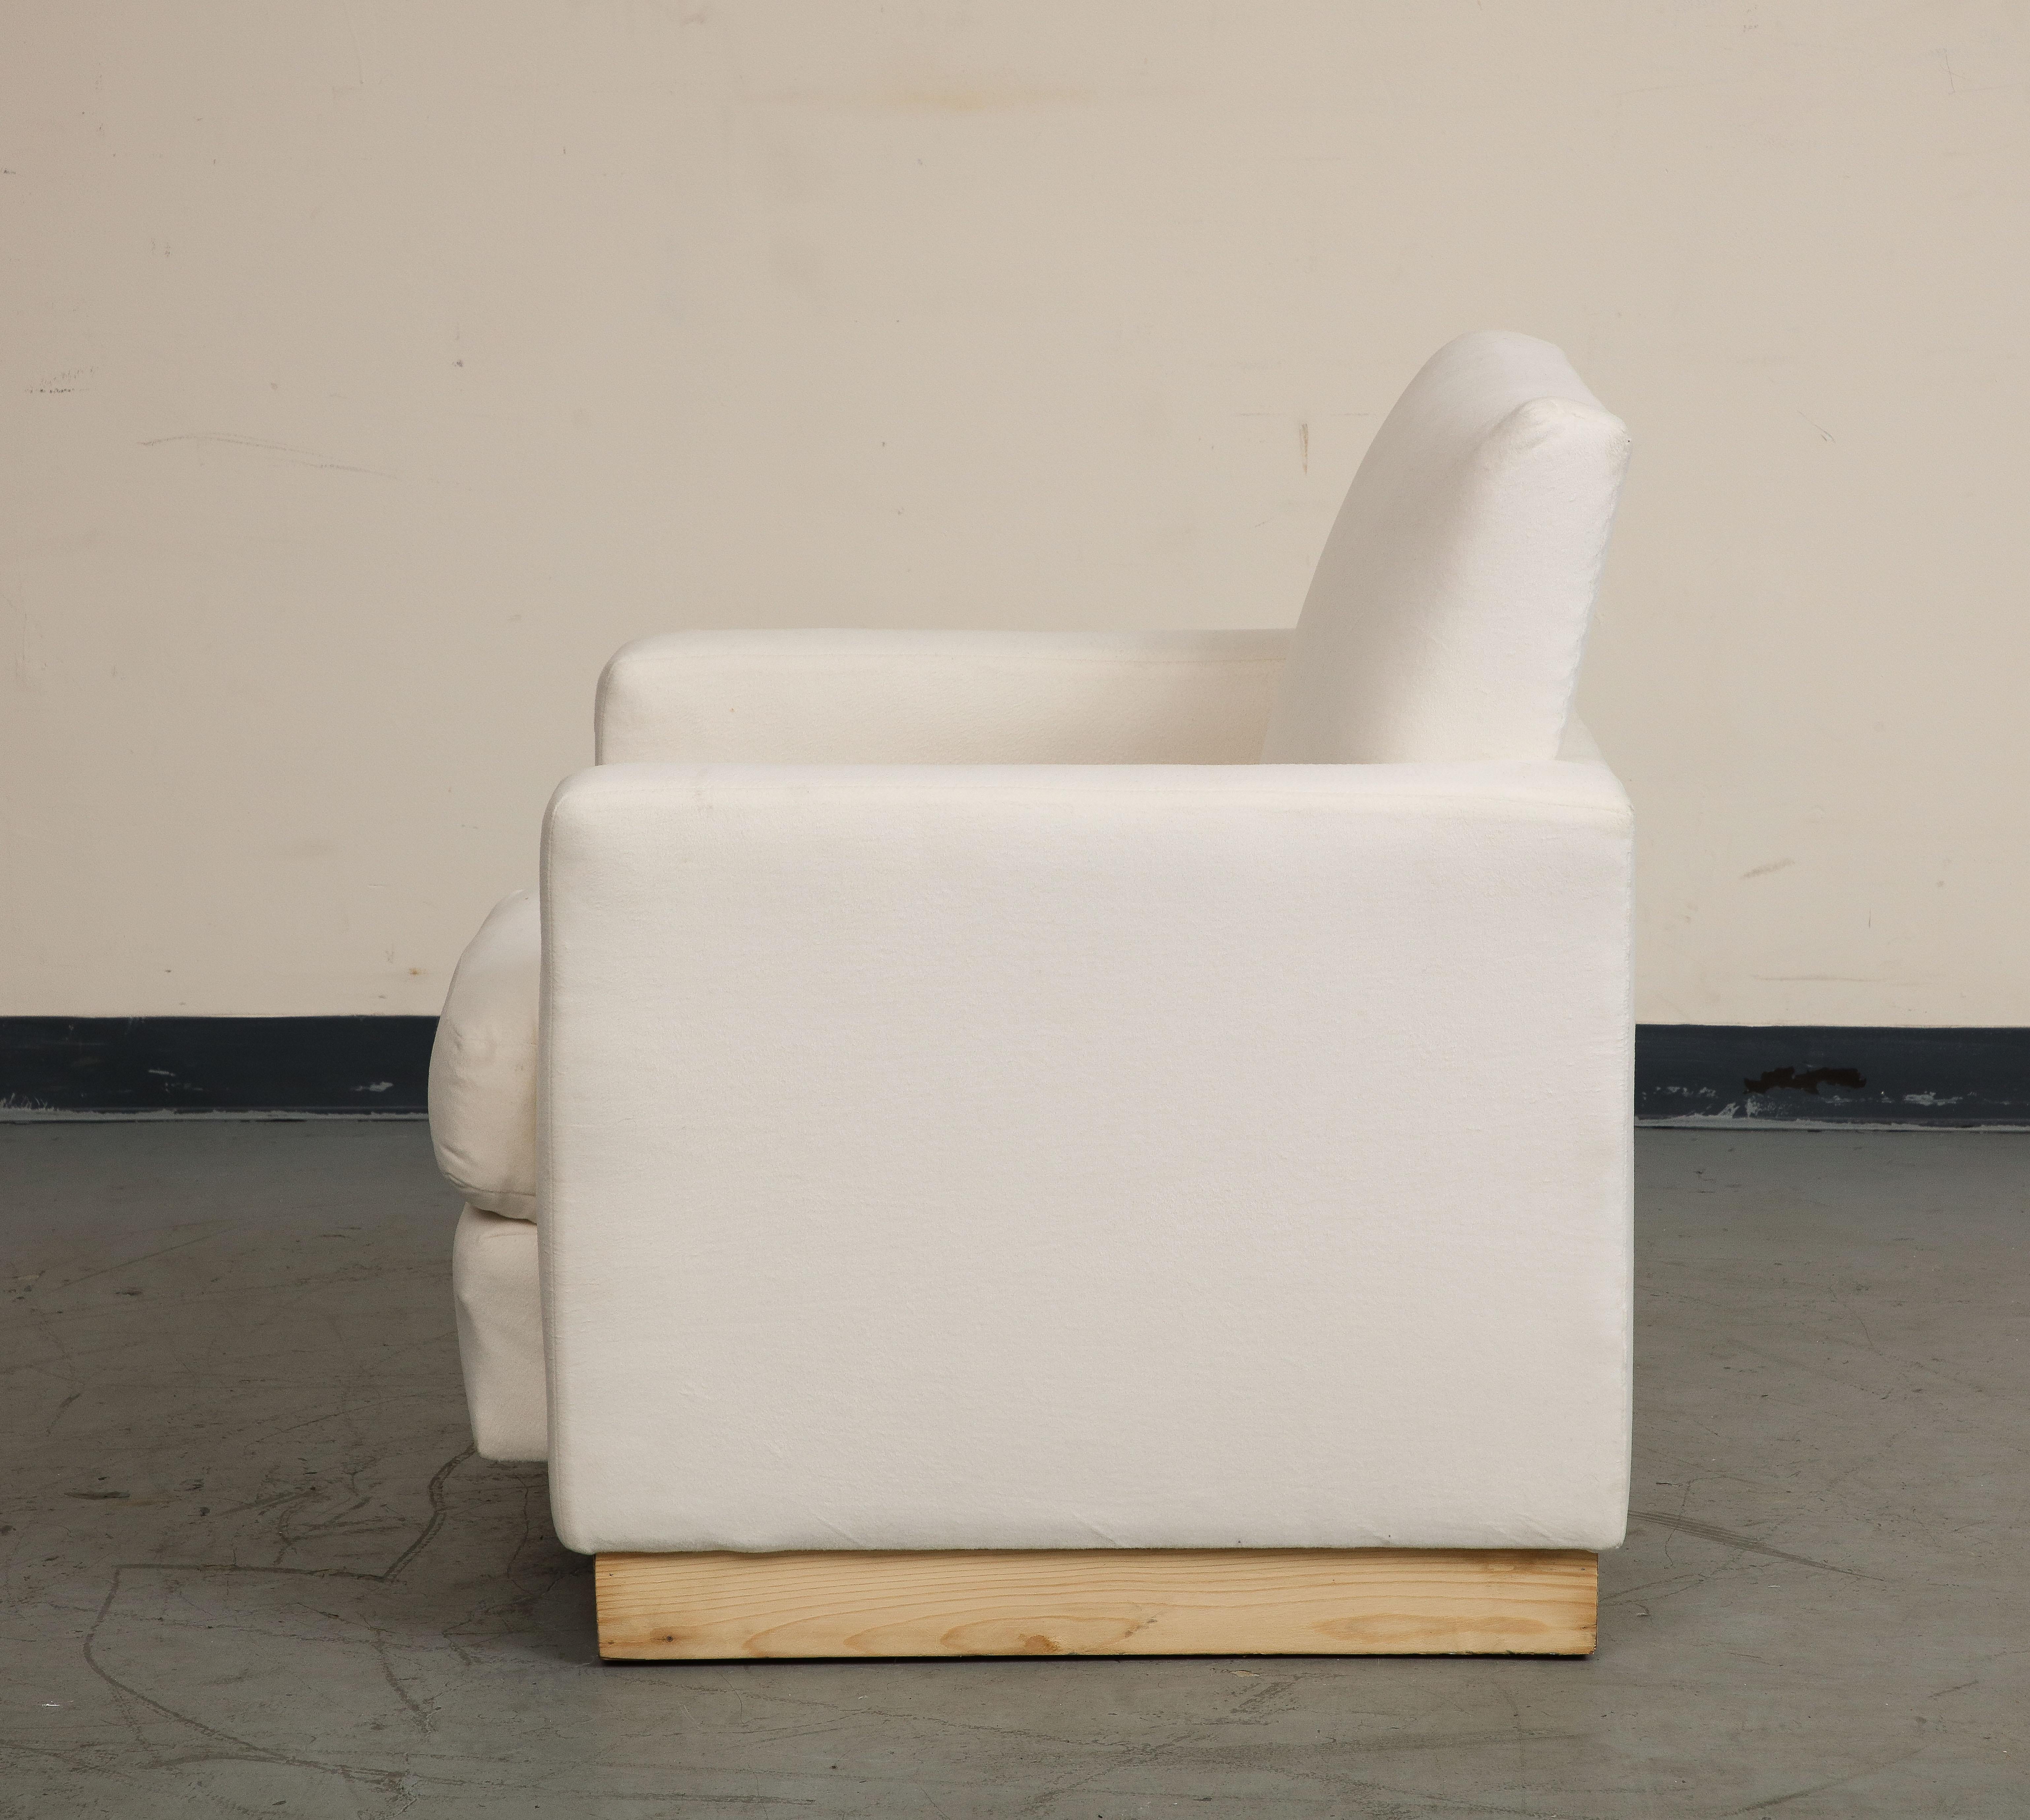 Midcentury Italian Club Chair by Giuseppe Pagano Pogatschnig, 1940s For Sale 2